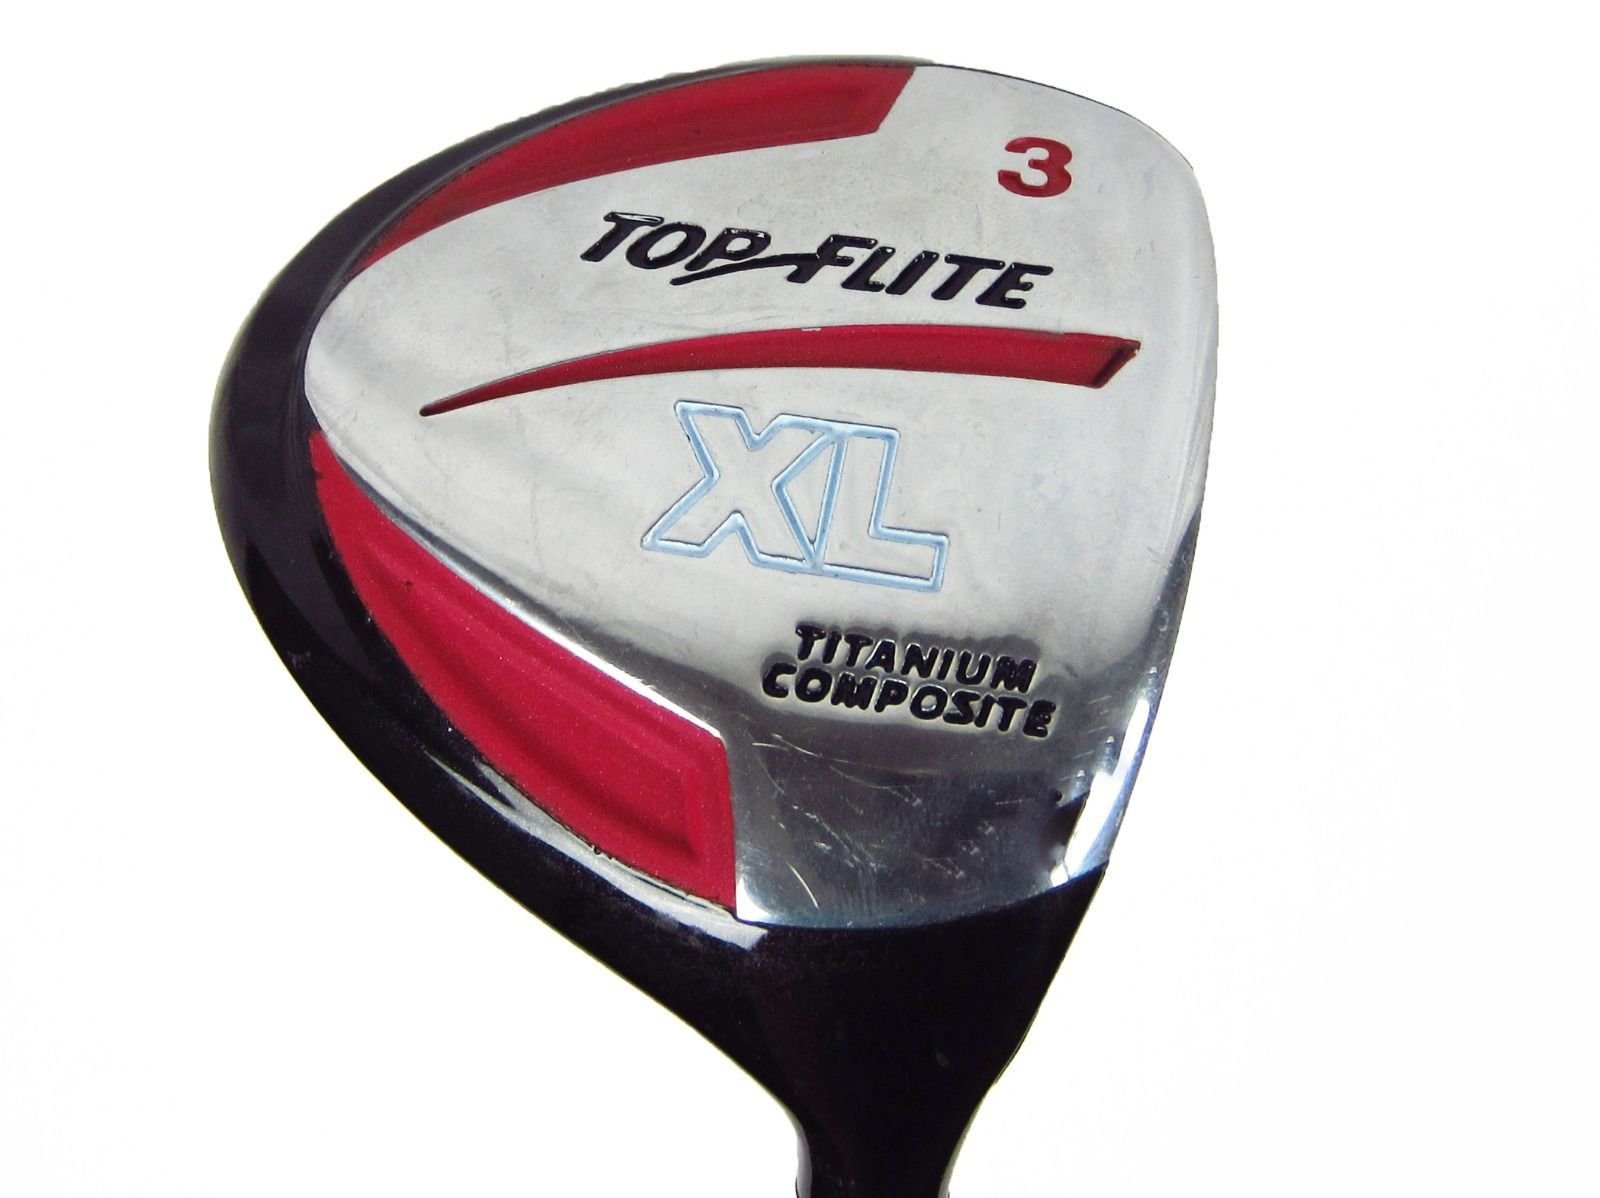 Top Flite XL 3 Wood Right Handed Woman's Golf Club Titanium Composite